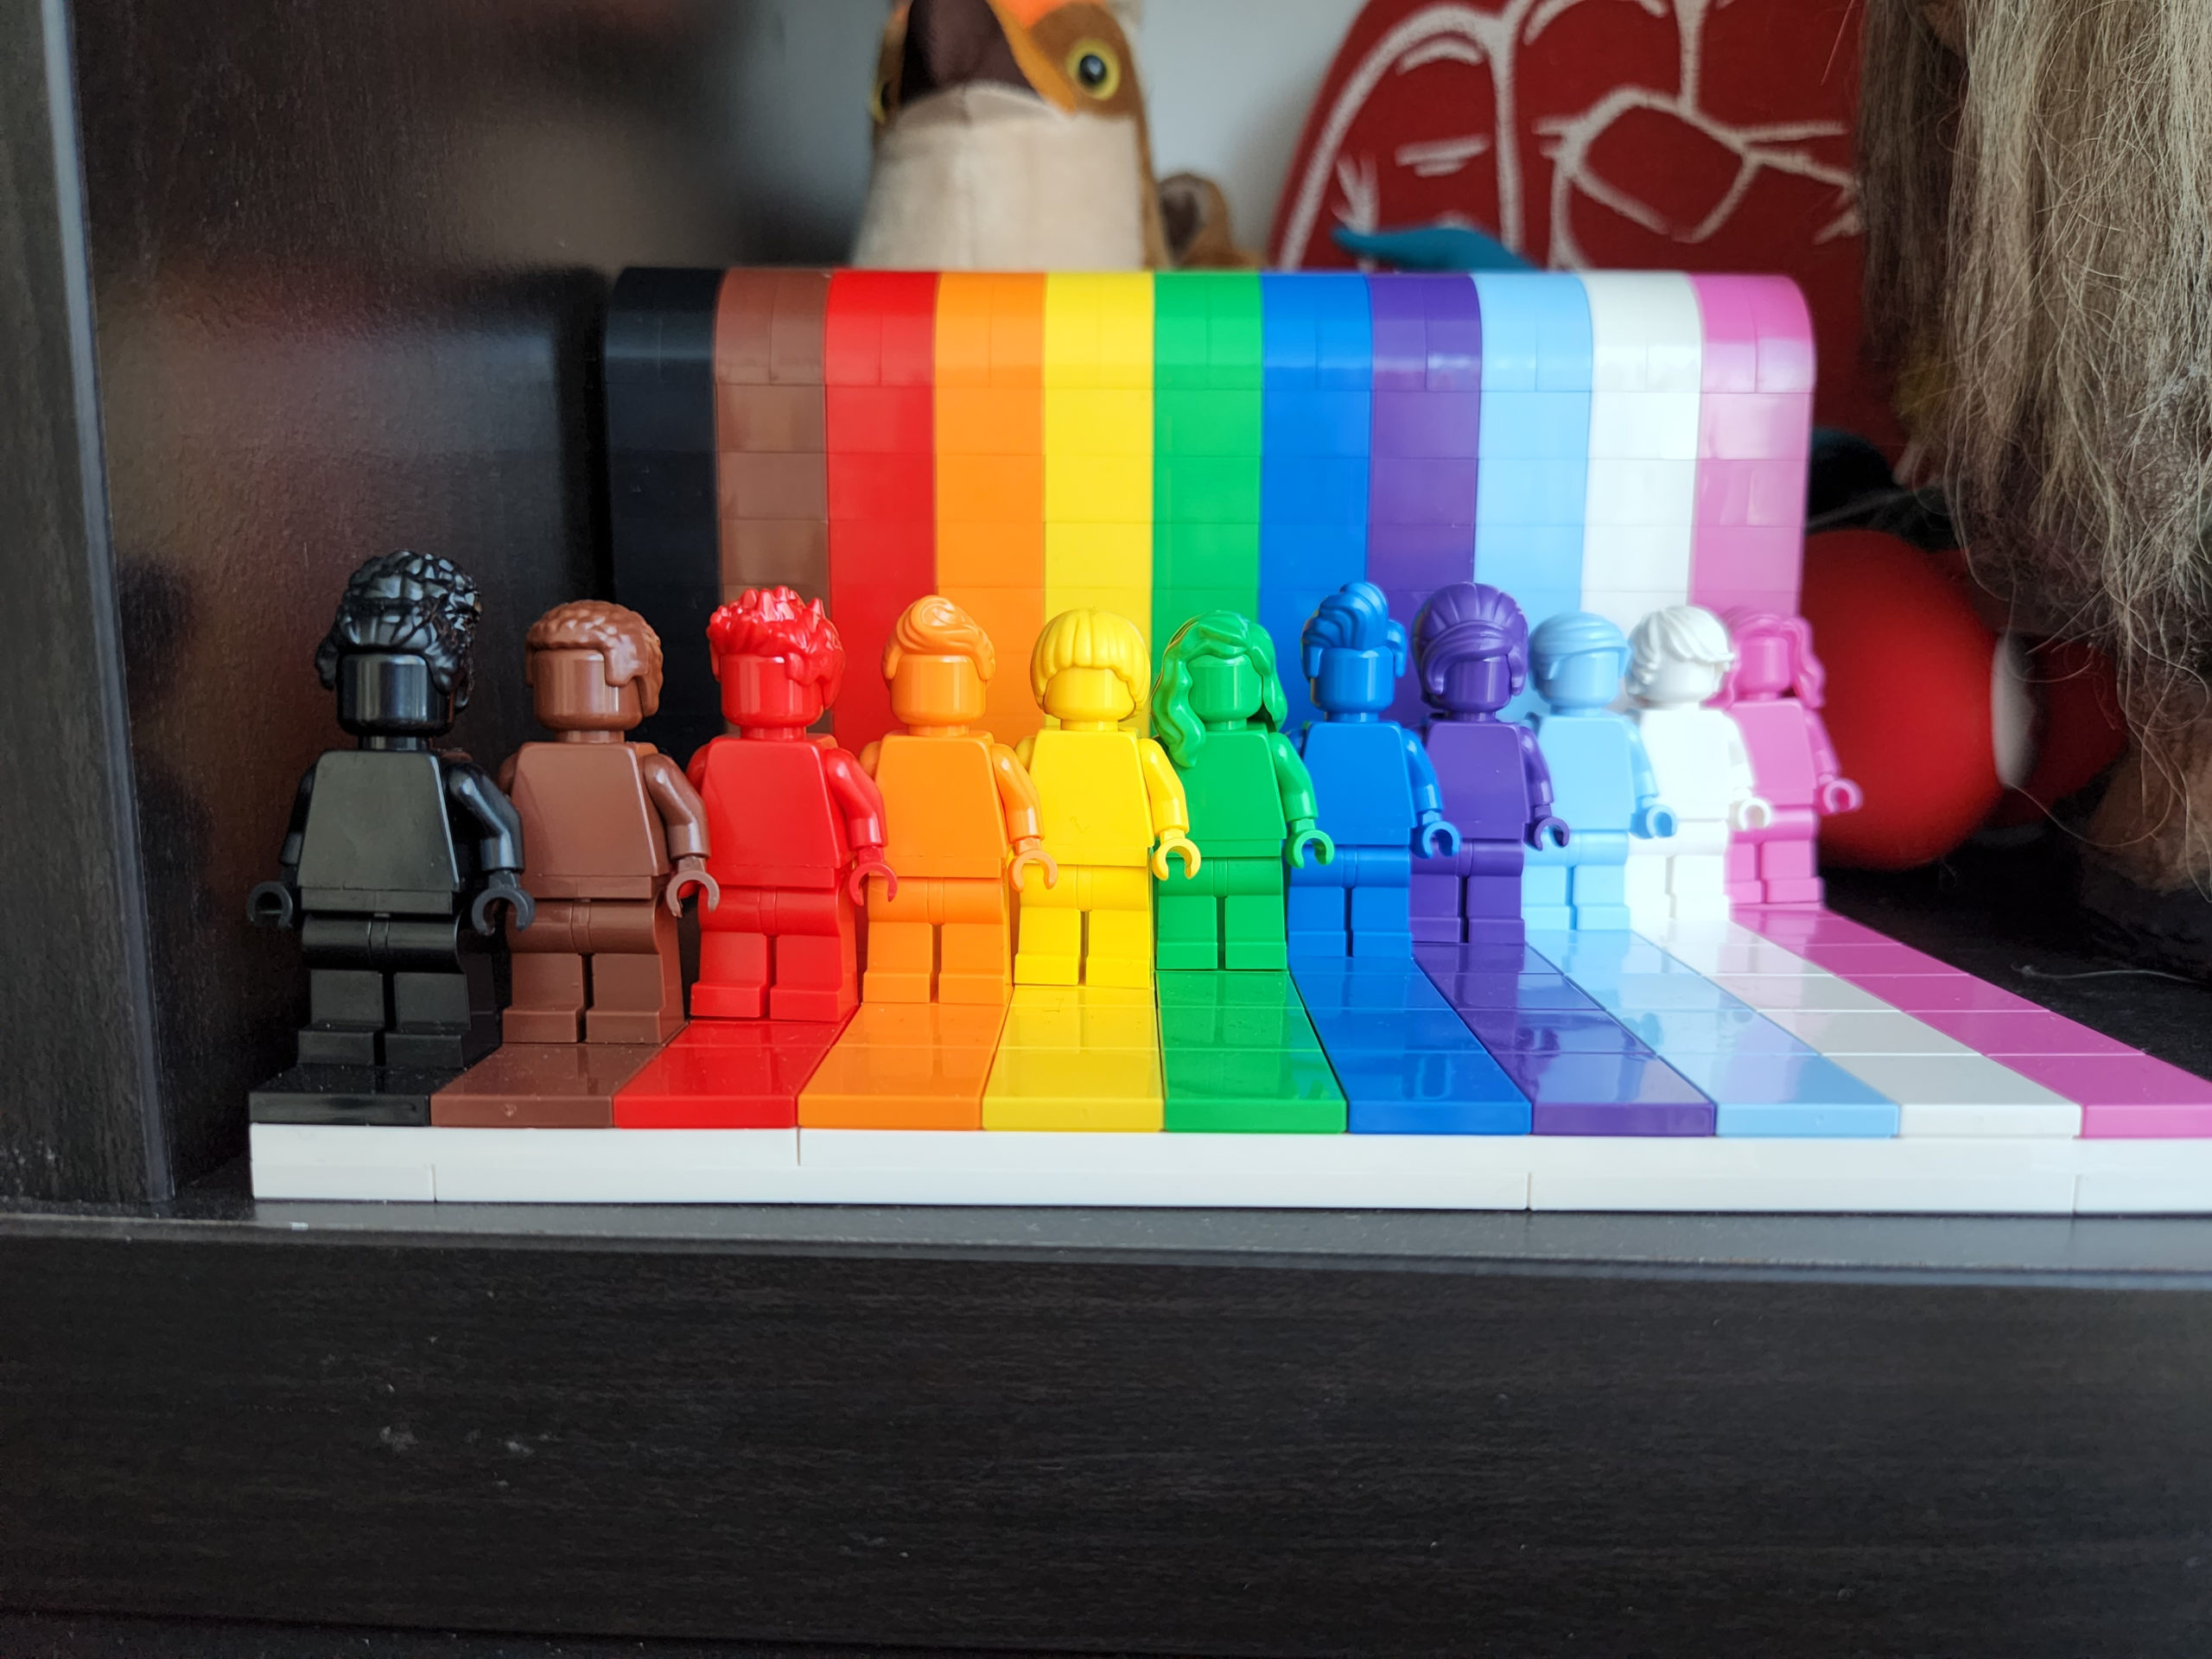 Rainbow Lego figures on a shelf